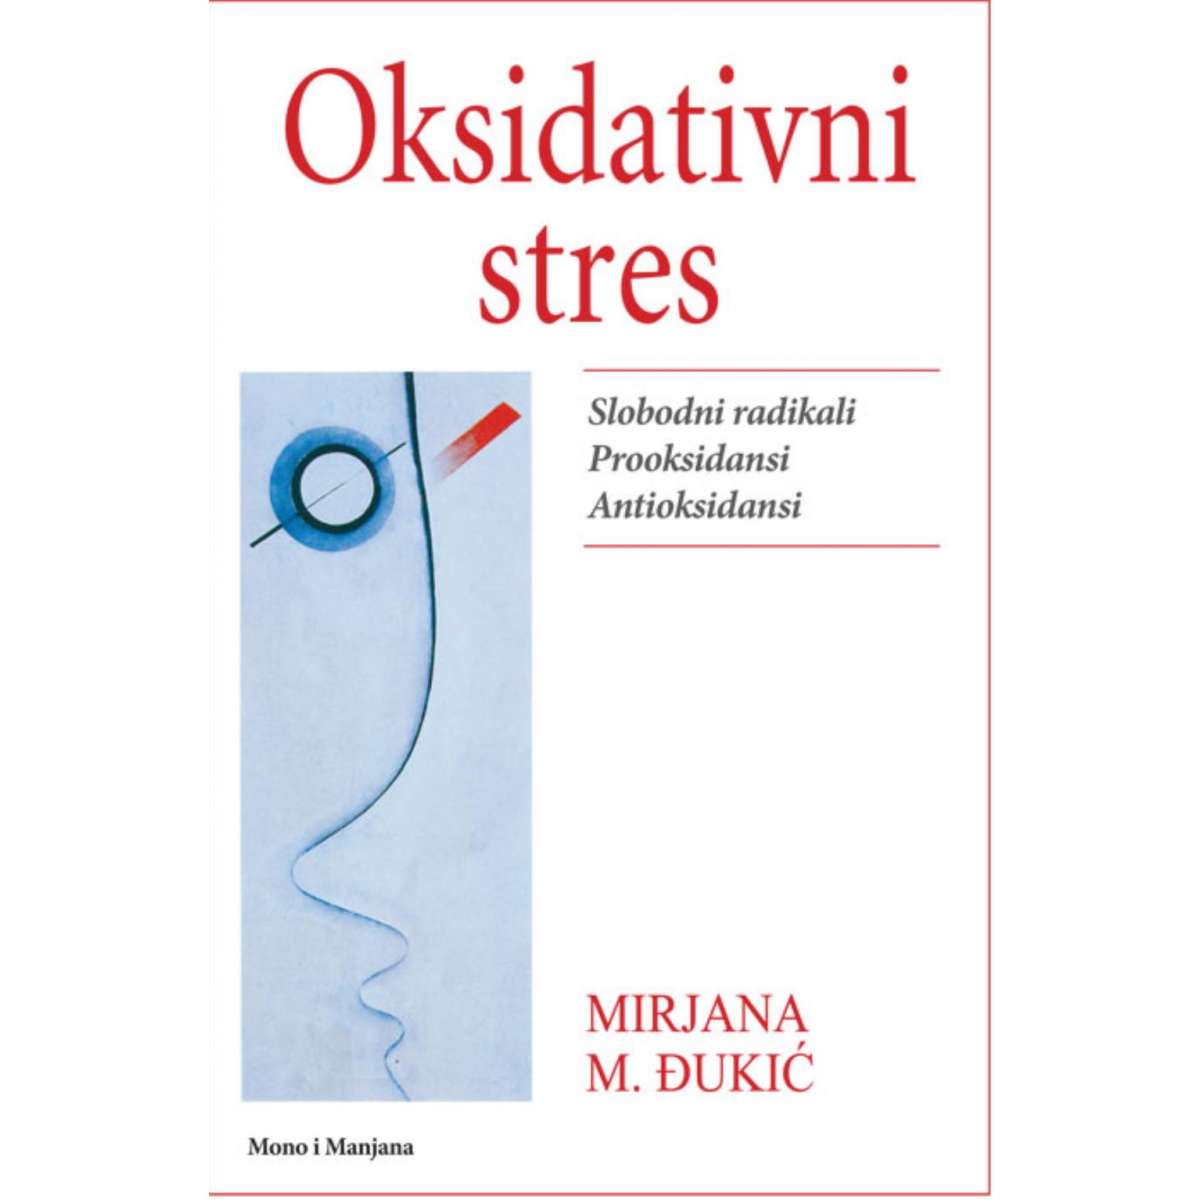 Oksidativni stres T-slobodni radikali 